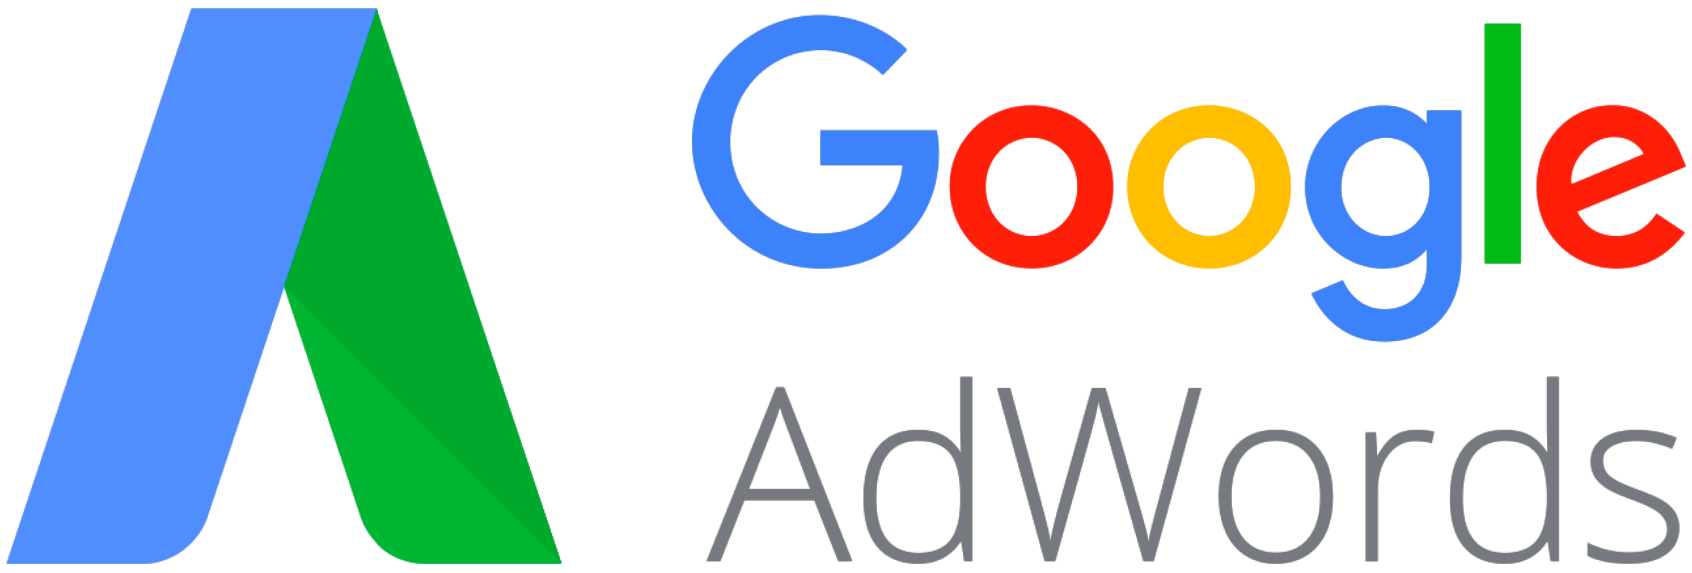 google-adwords-logo-png-large - Fusing Marketing NYC Digital Marketing & Web Design